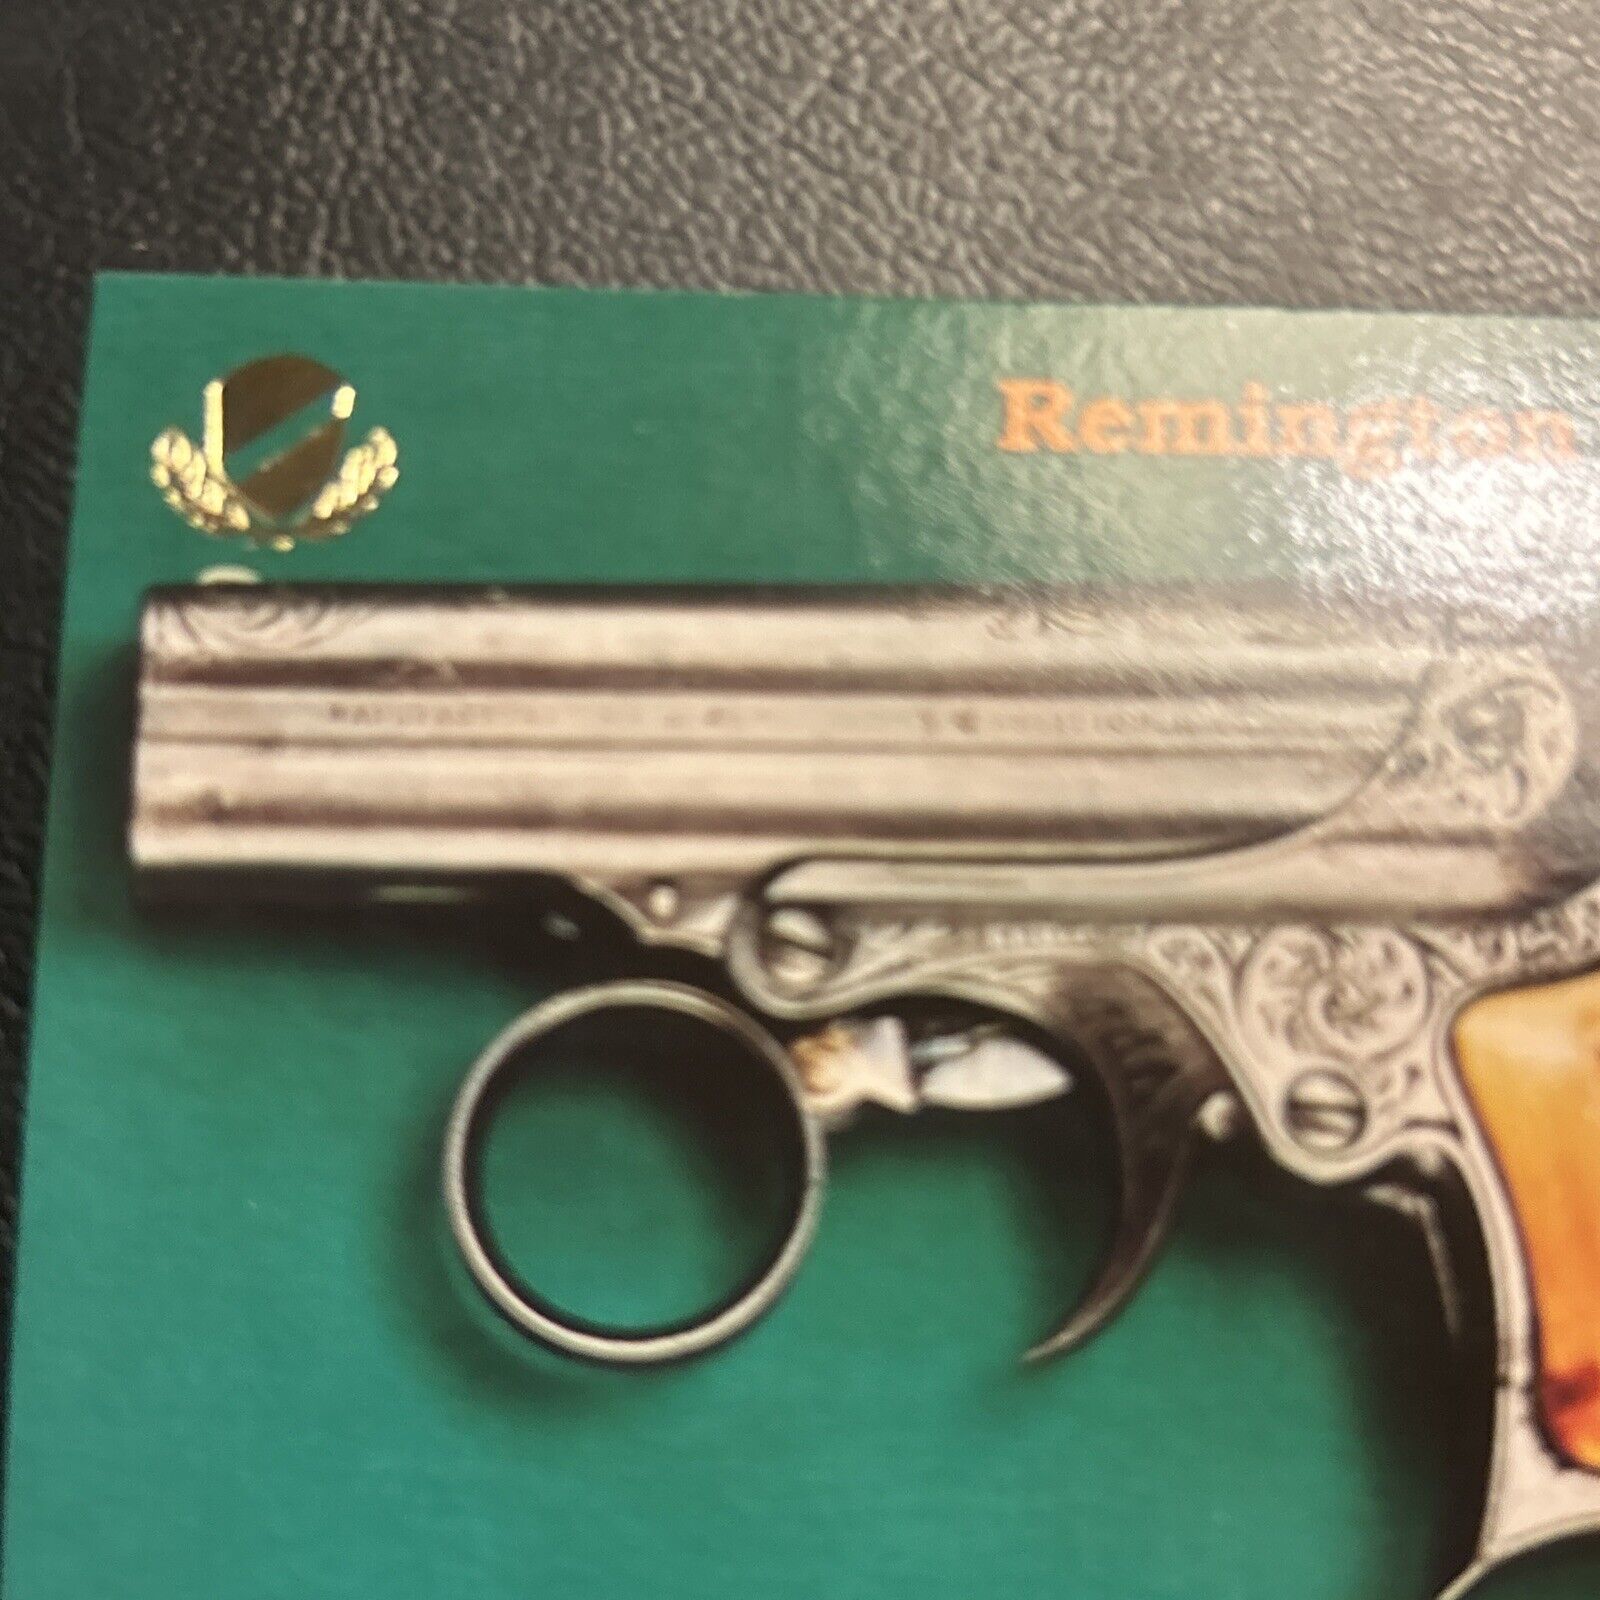 Jb2 Great Guns 1993 Gold Shield #78 Remington Elliott Derringer, 32 Caliber